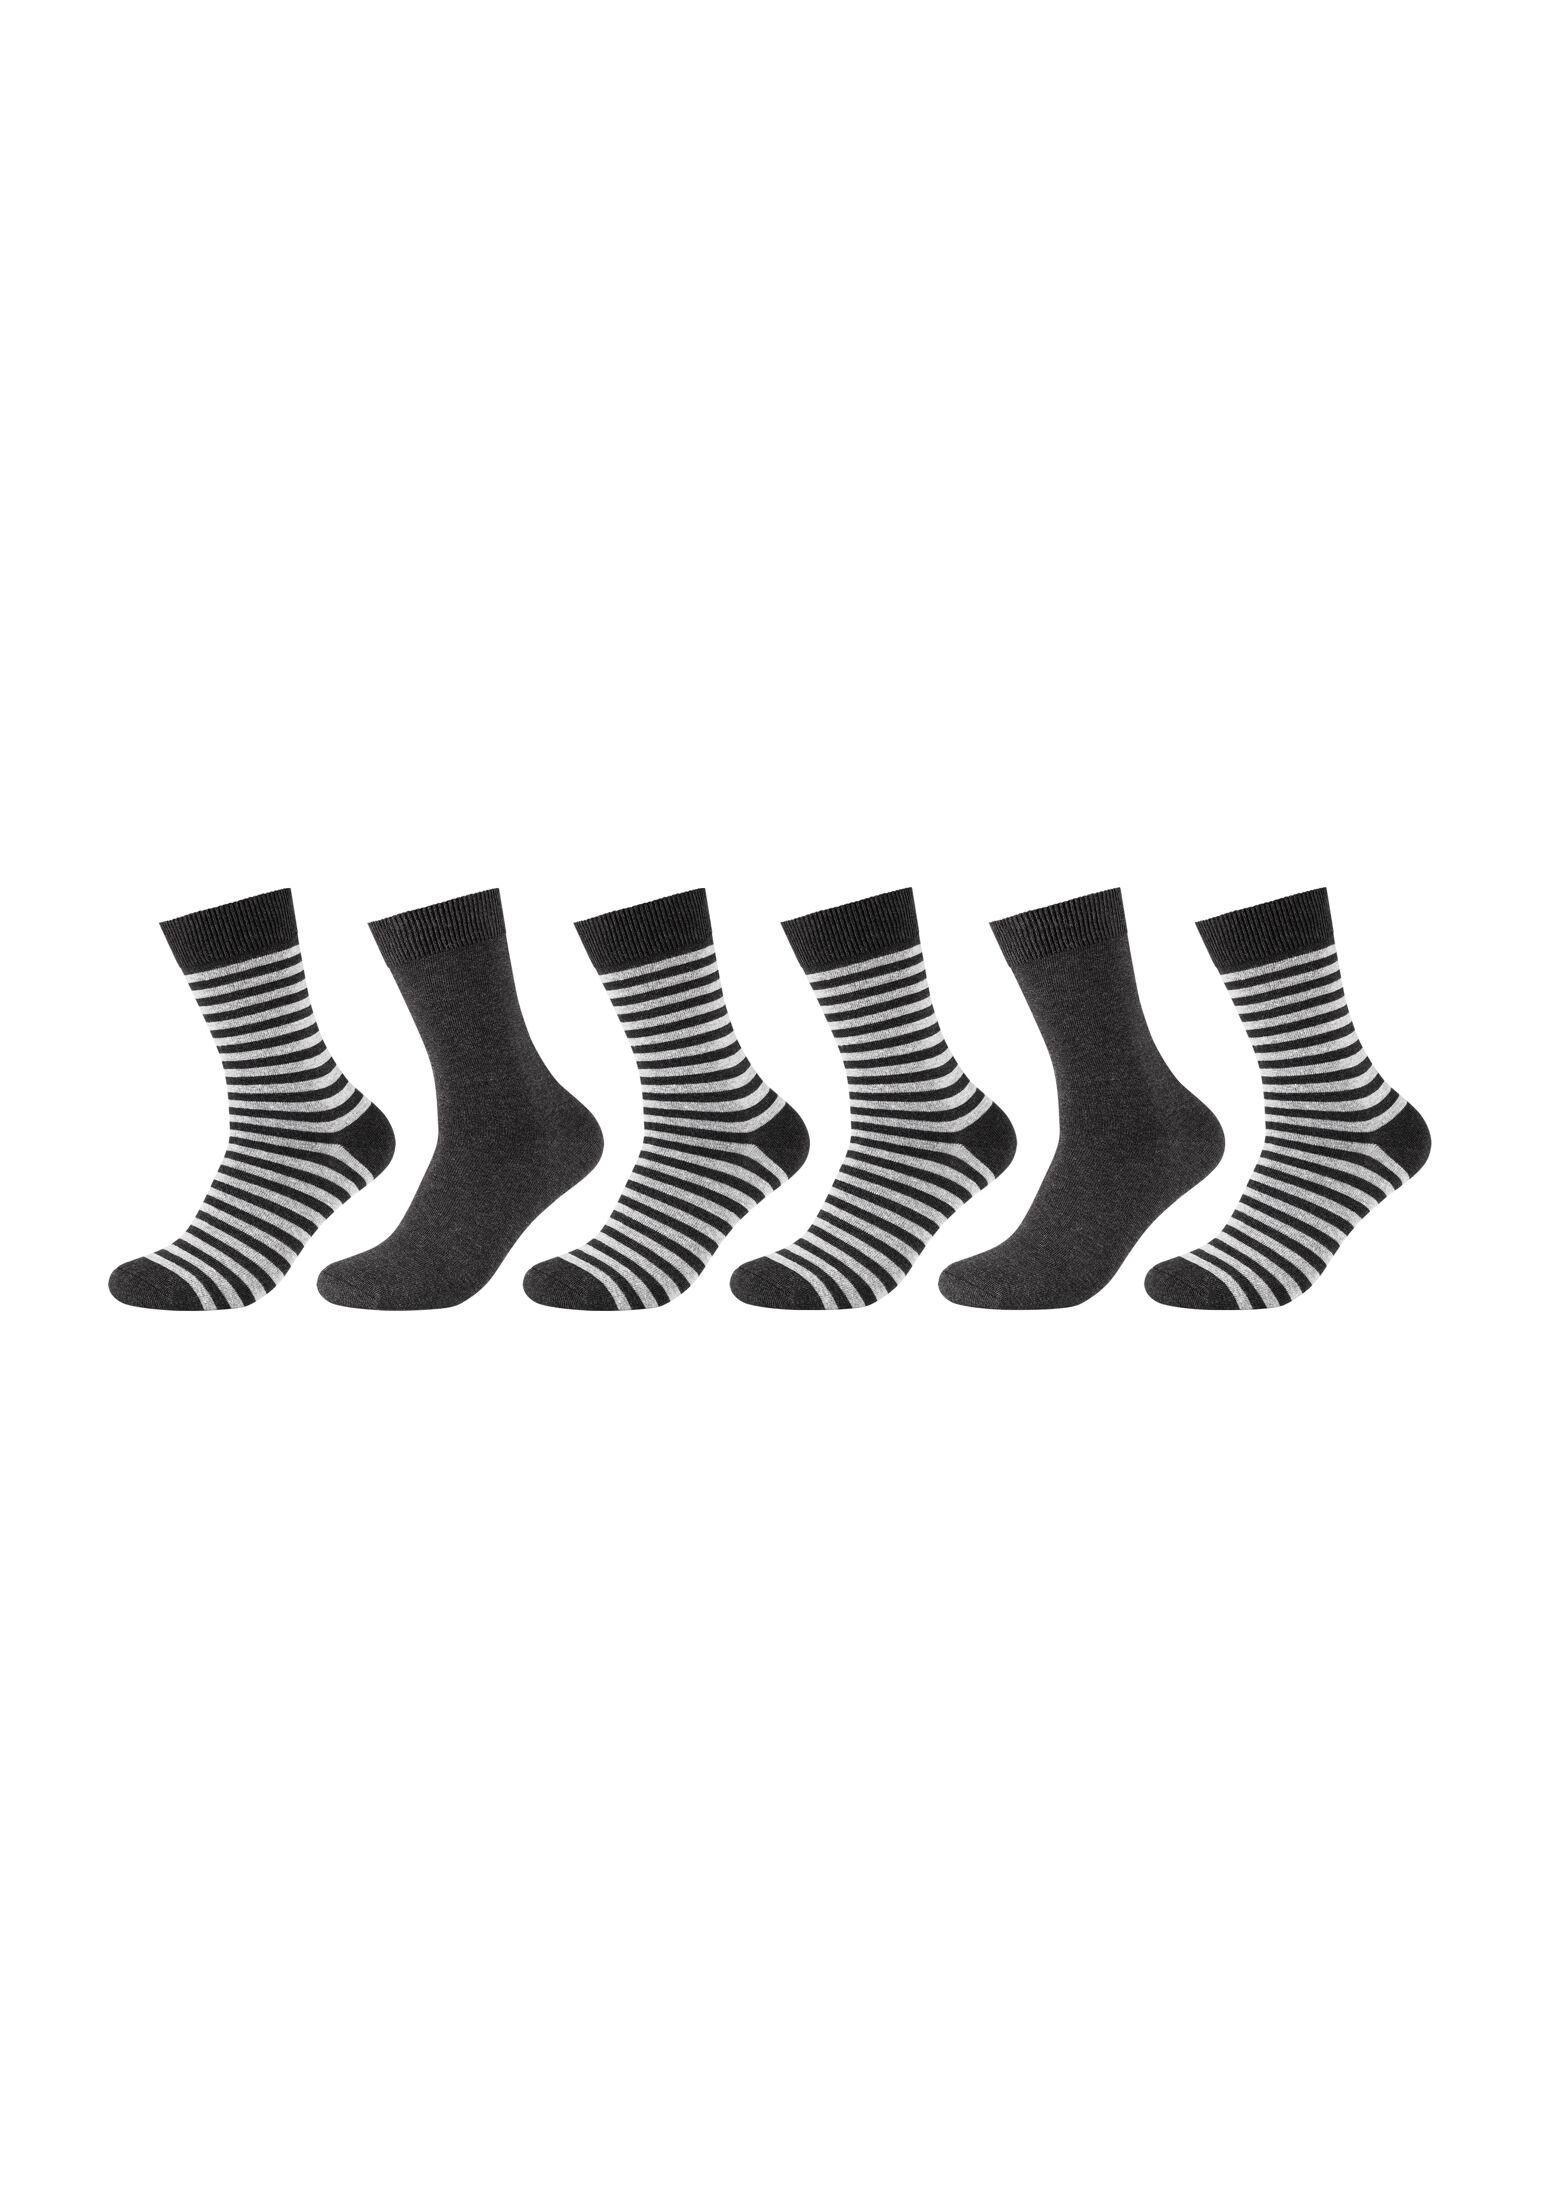 Camano Socken Socken 6er Pack, Strapazierfähig: verstärkte Belastungszonen | Kurzsocken